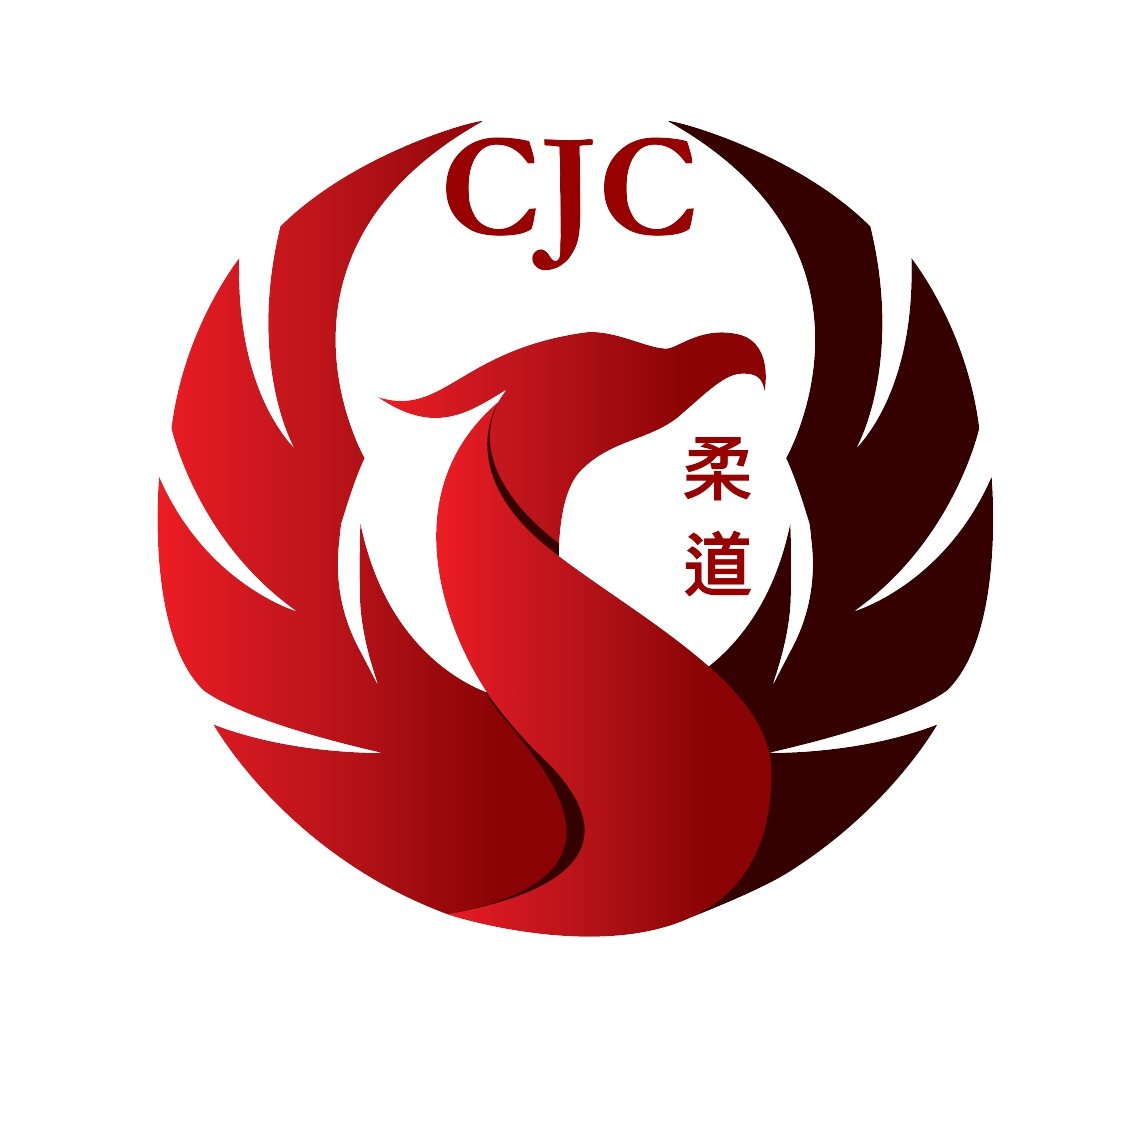 Cirencester Judo Club